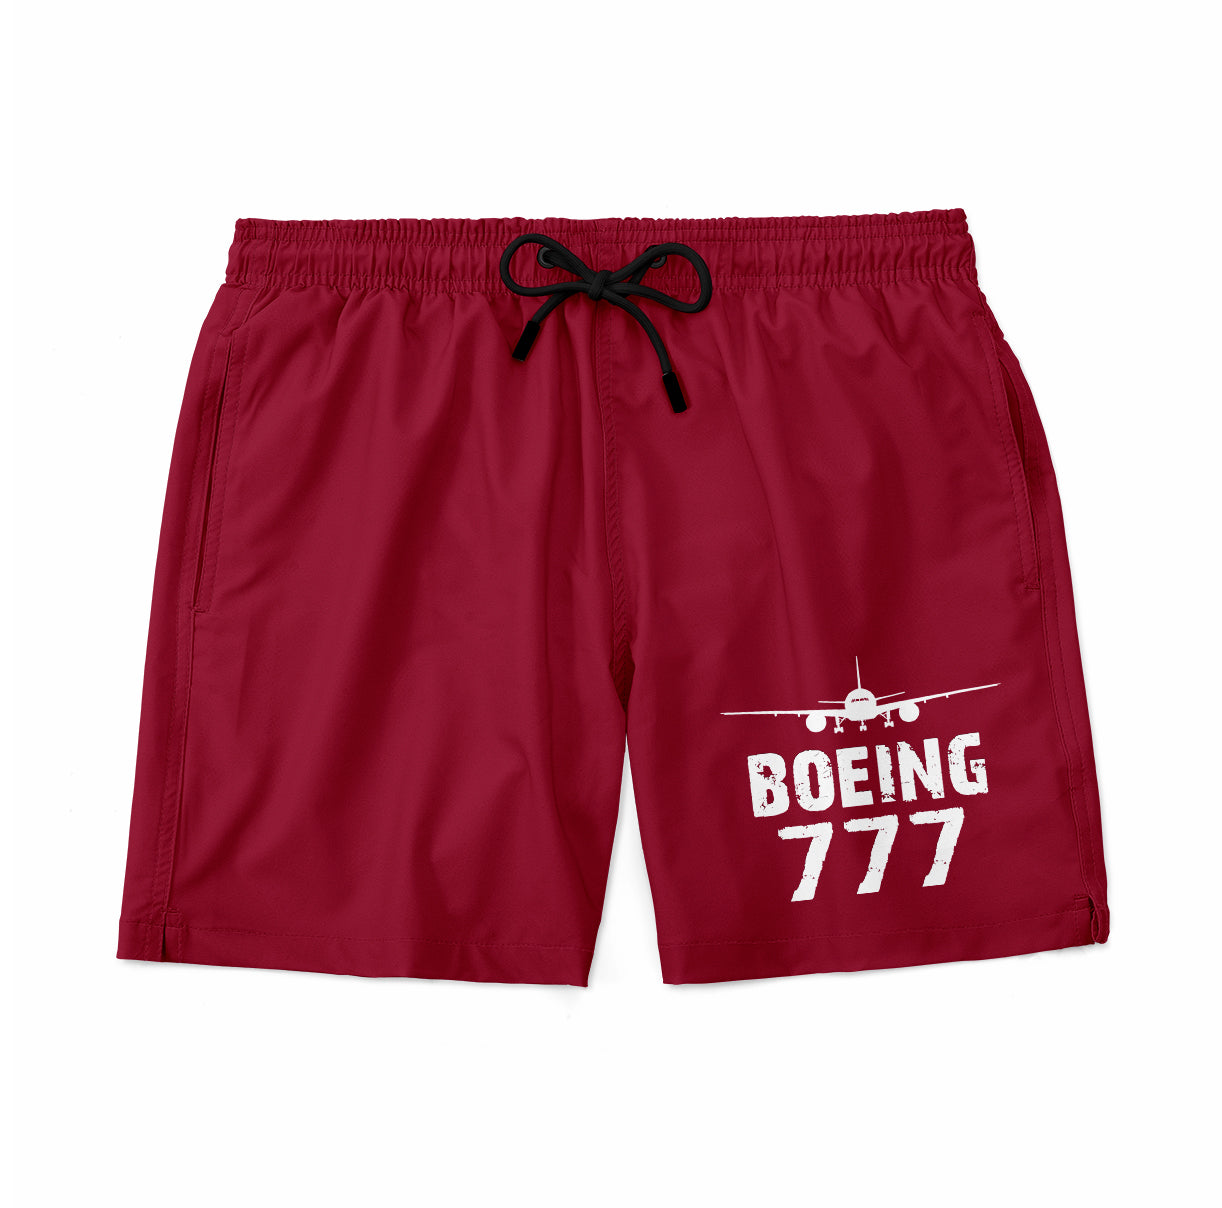 Boeing 777 & Plane Designed Swim Trunks & Shorts